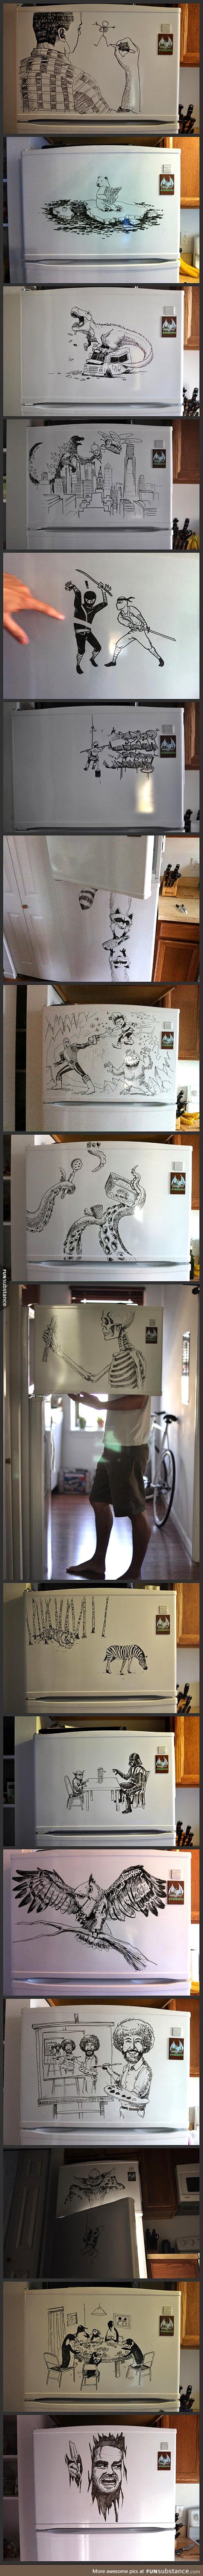 Creative refrigerator art